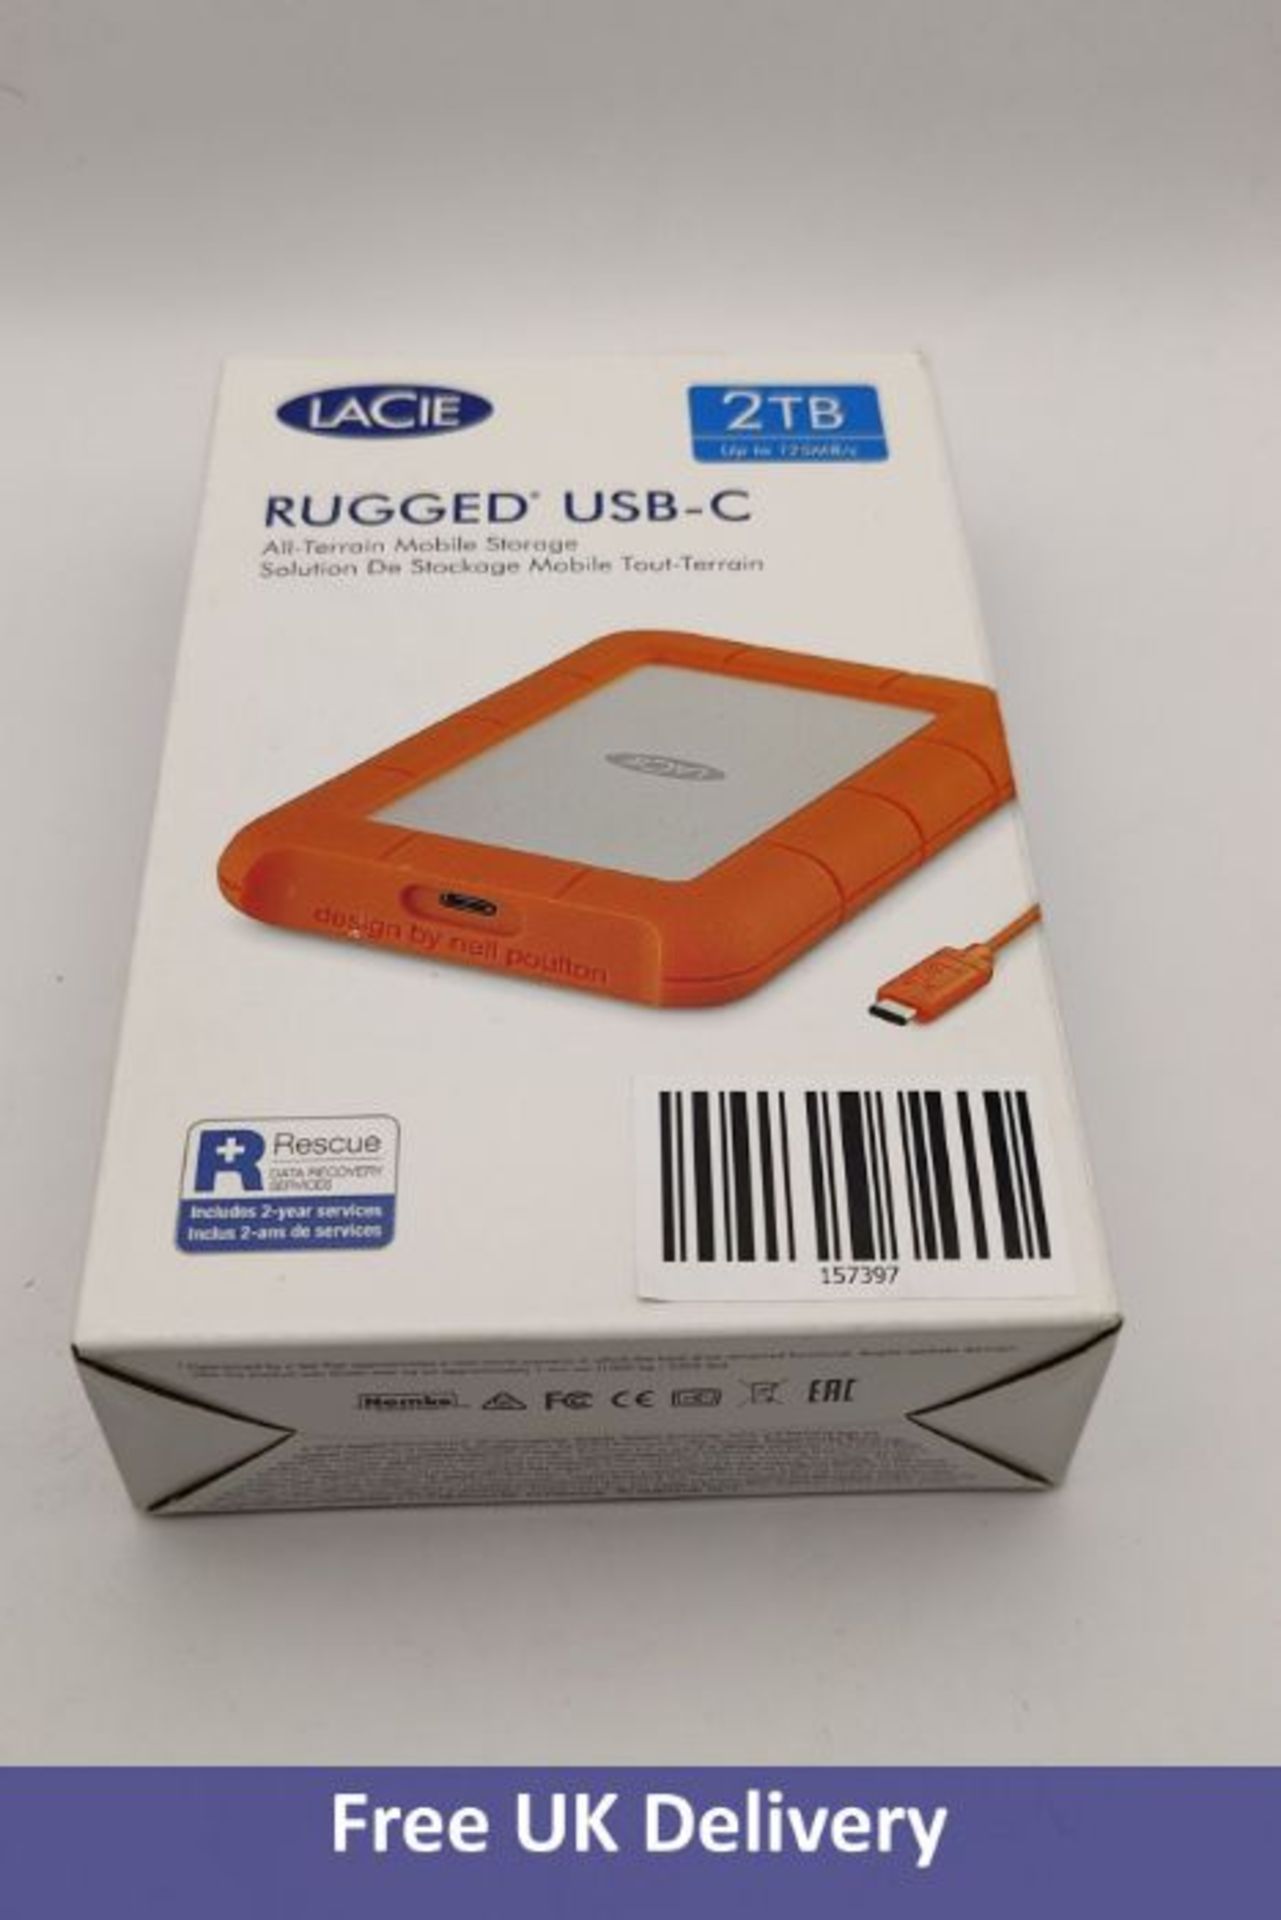 LaCie Rugged USB-C 2TB All-Terrain Mobile Storage, External Hard Drive, Orange. Box sealed